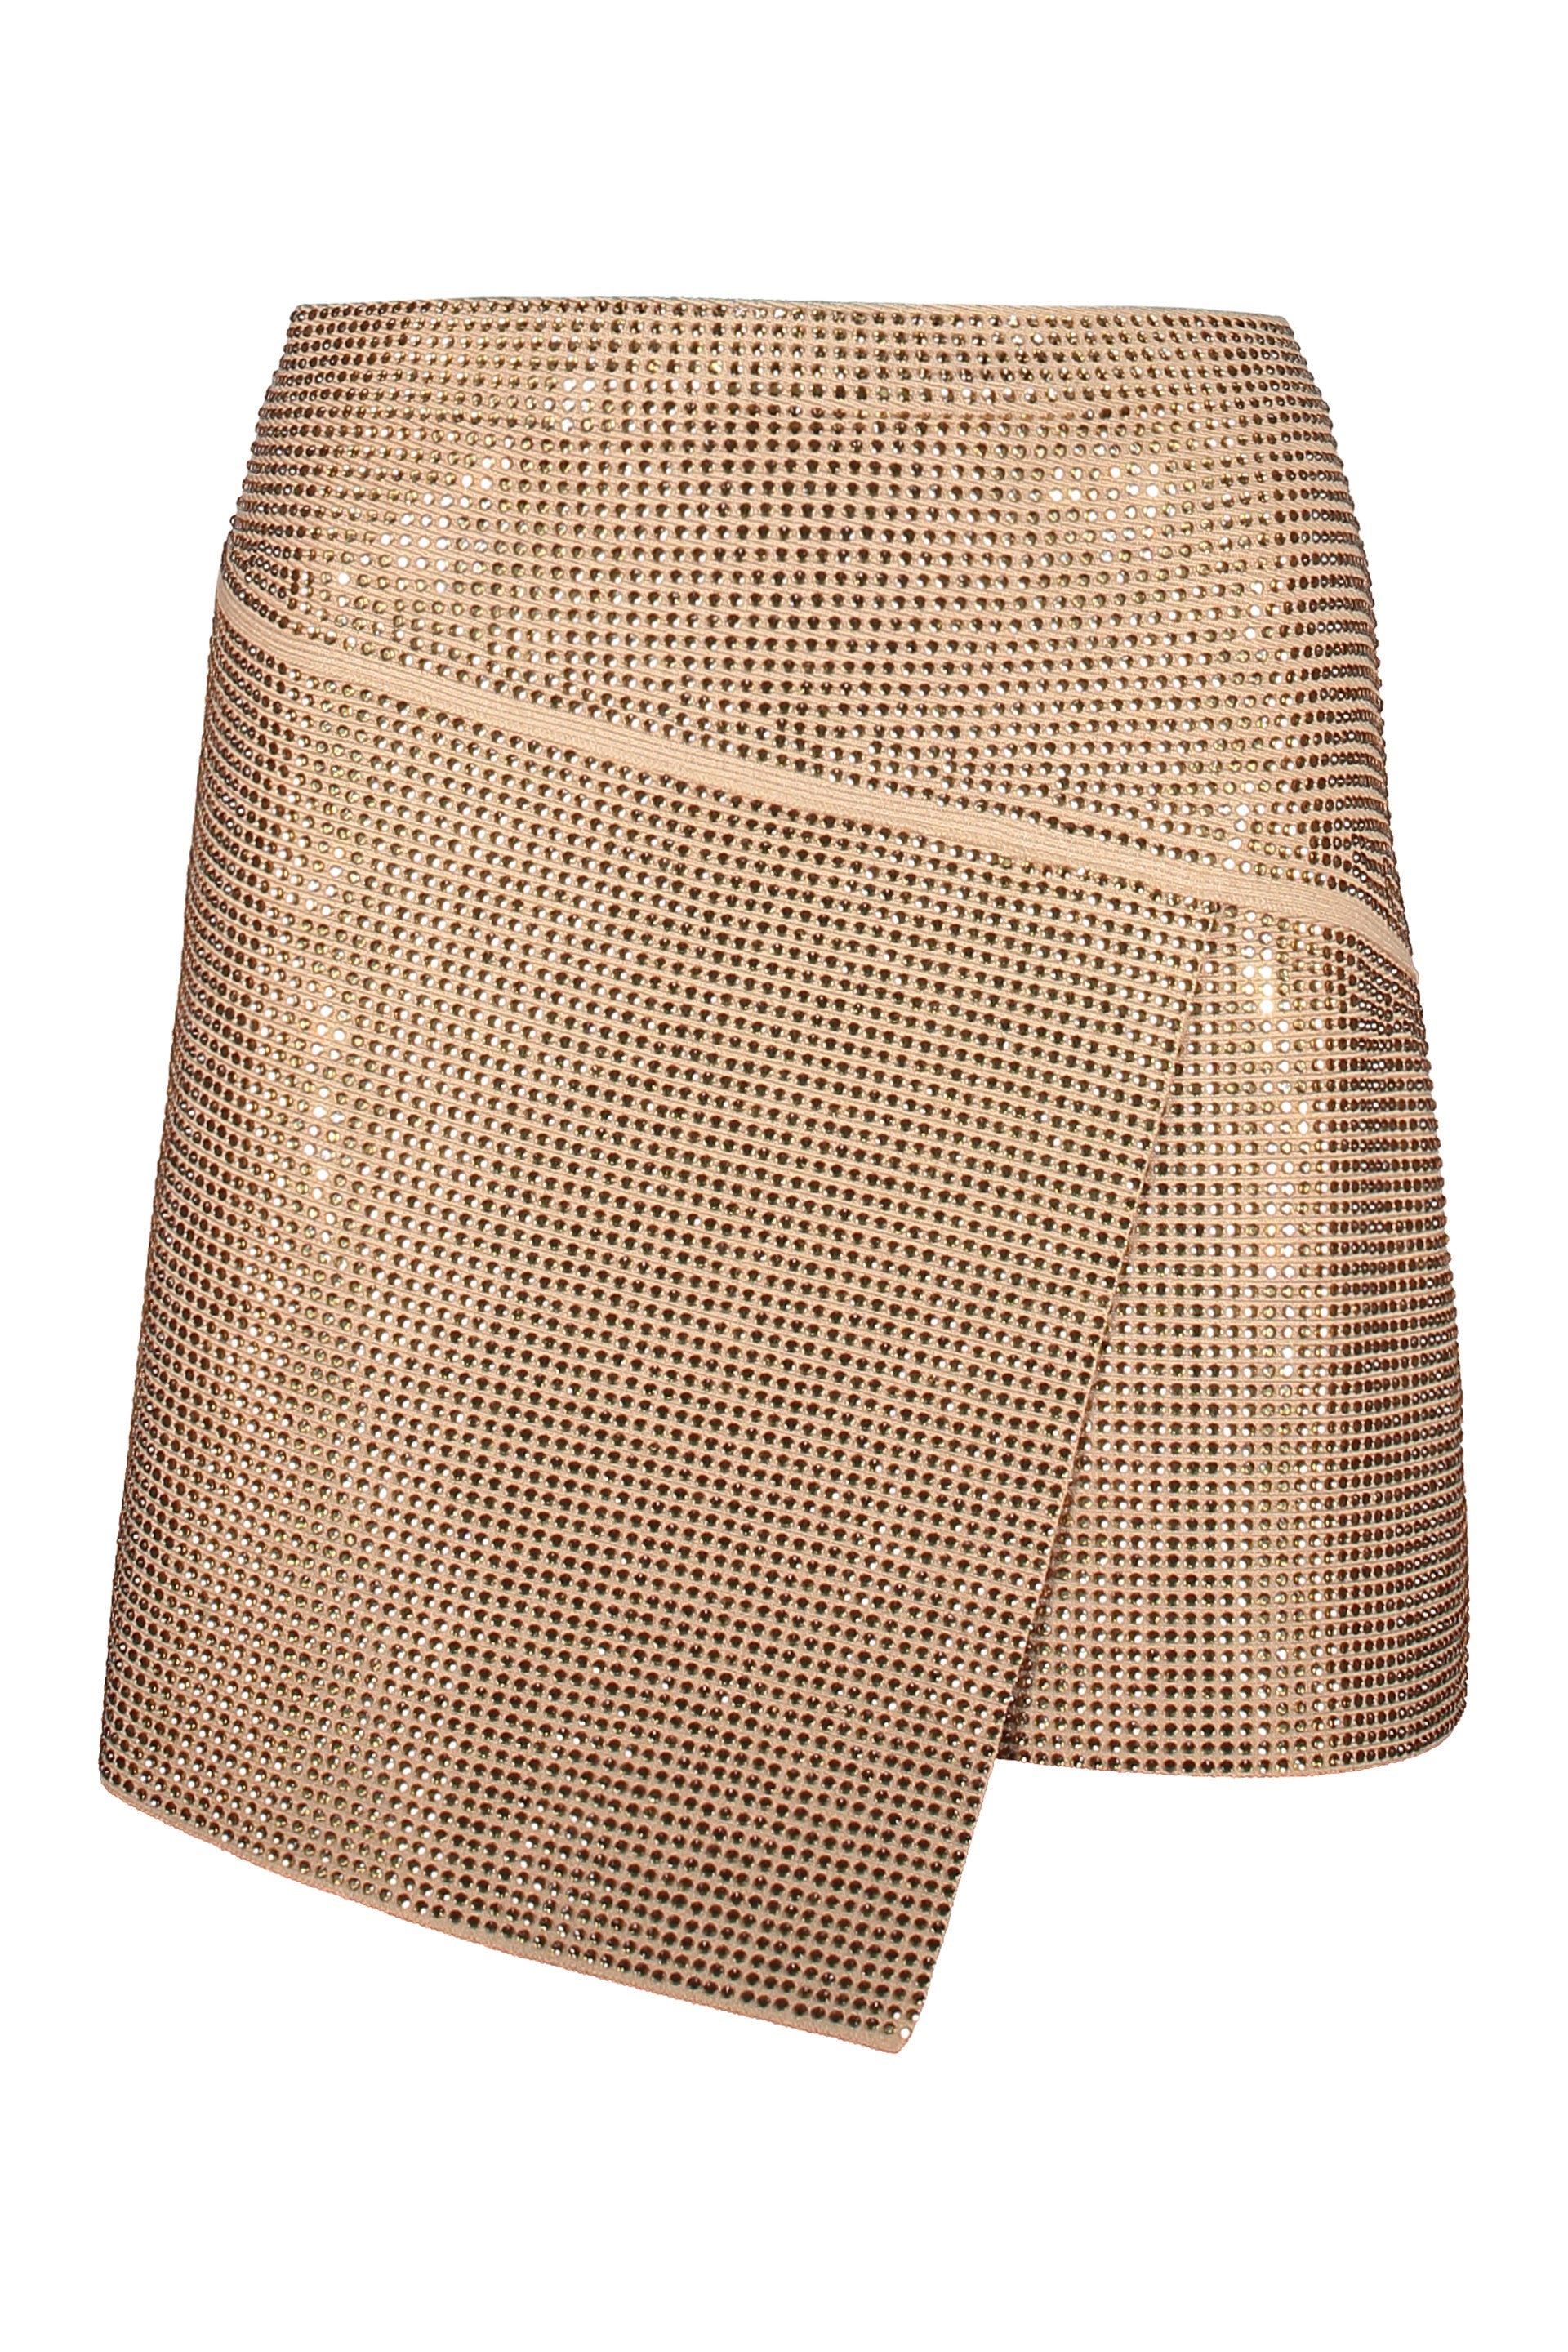 ANDREADAMO-OUTLET-SALE-Asymmetric-miniskirt-Kleider-Rocke-M-ARCHIVE-COLLECTION.jpg